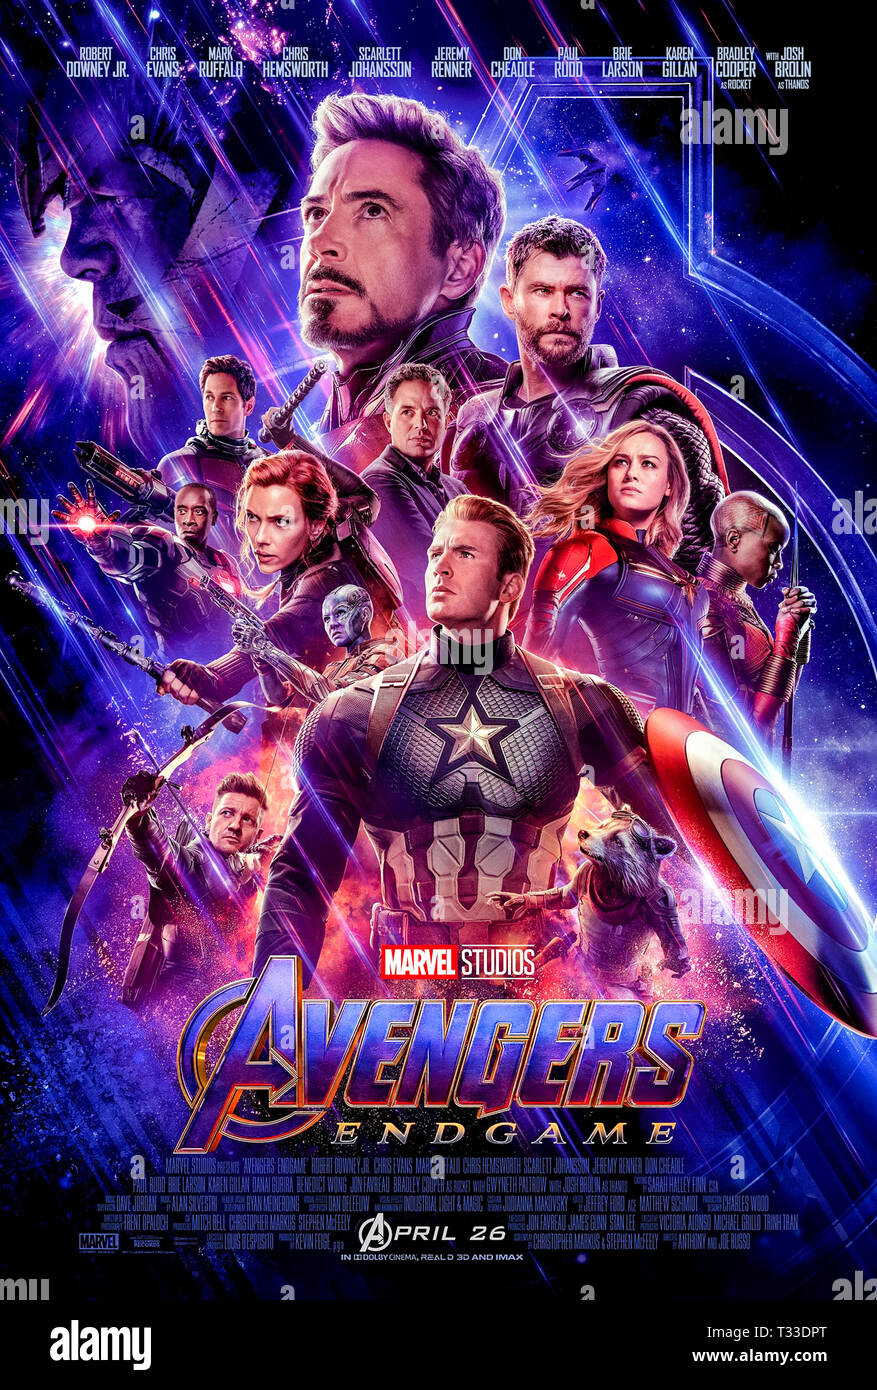 Avengers Endgame Poster New 2019 Movie Marvel Superheros FREE P+P CHOOSE UR SIZE